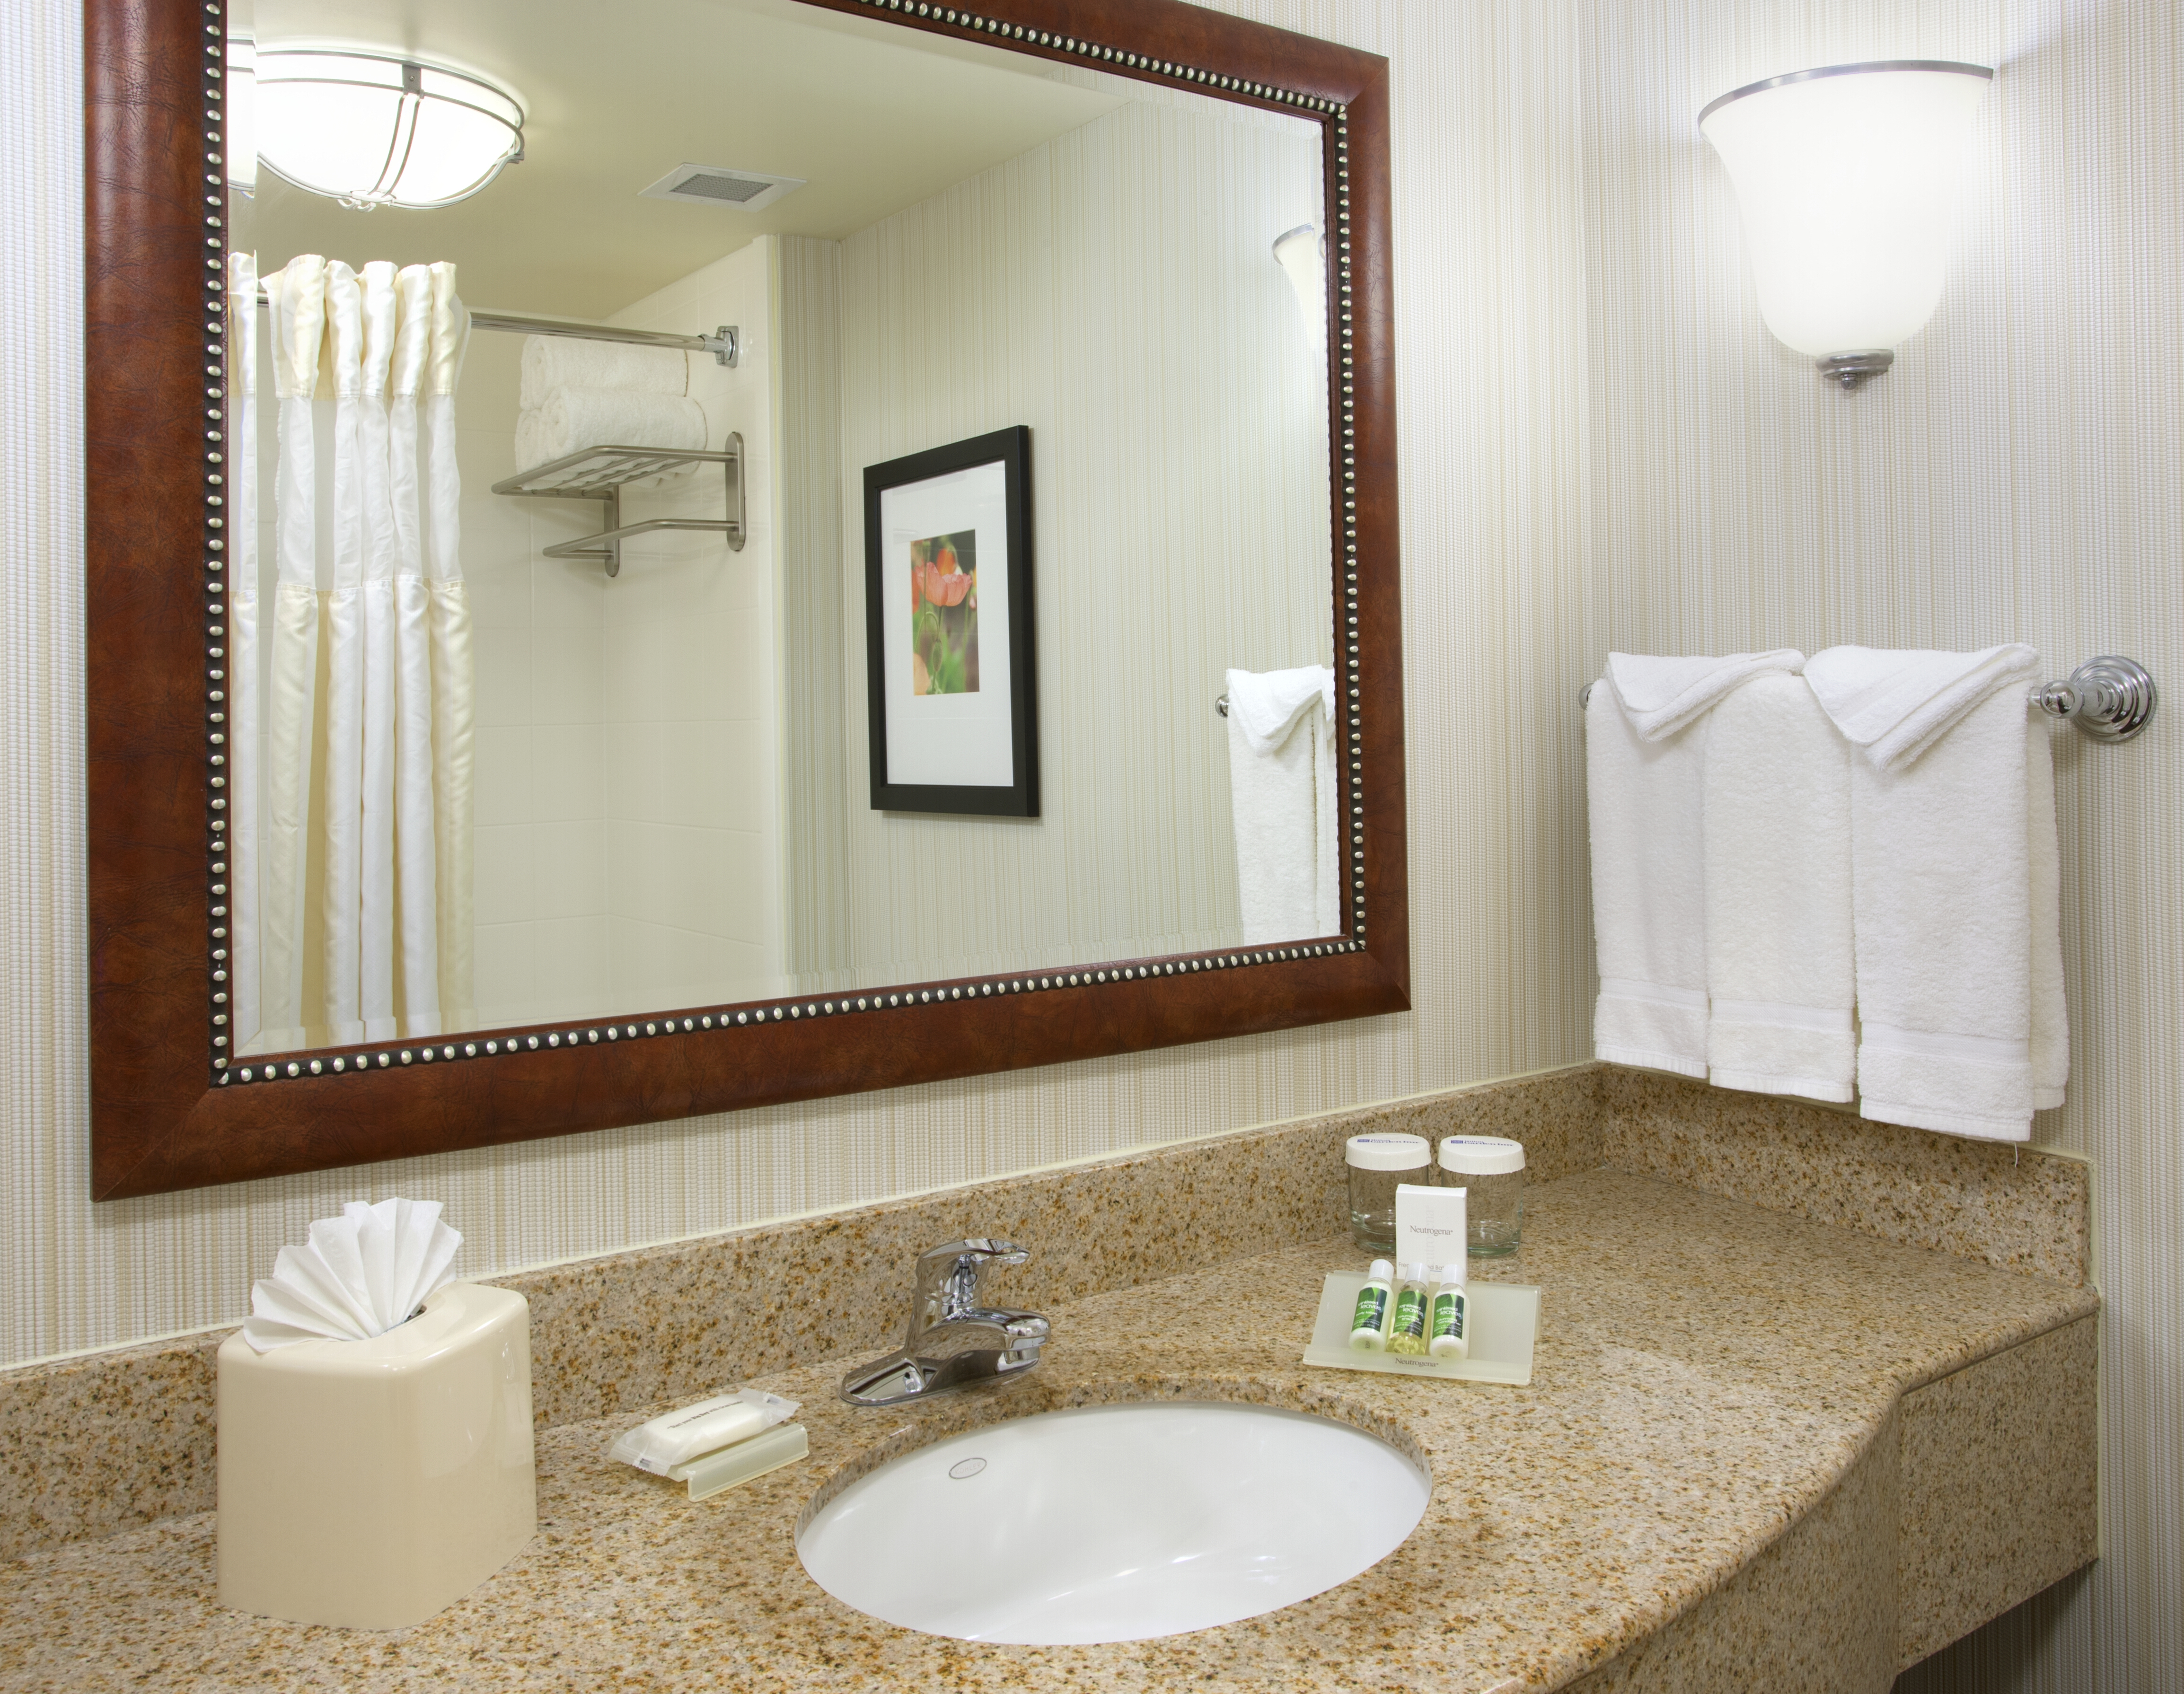 Guest bathroom vanity and mirror